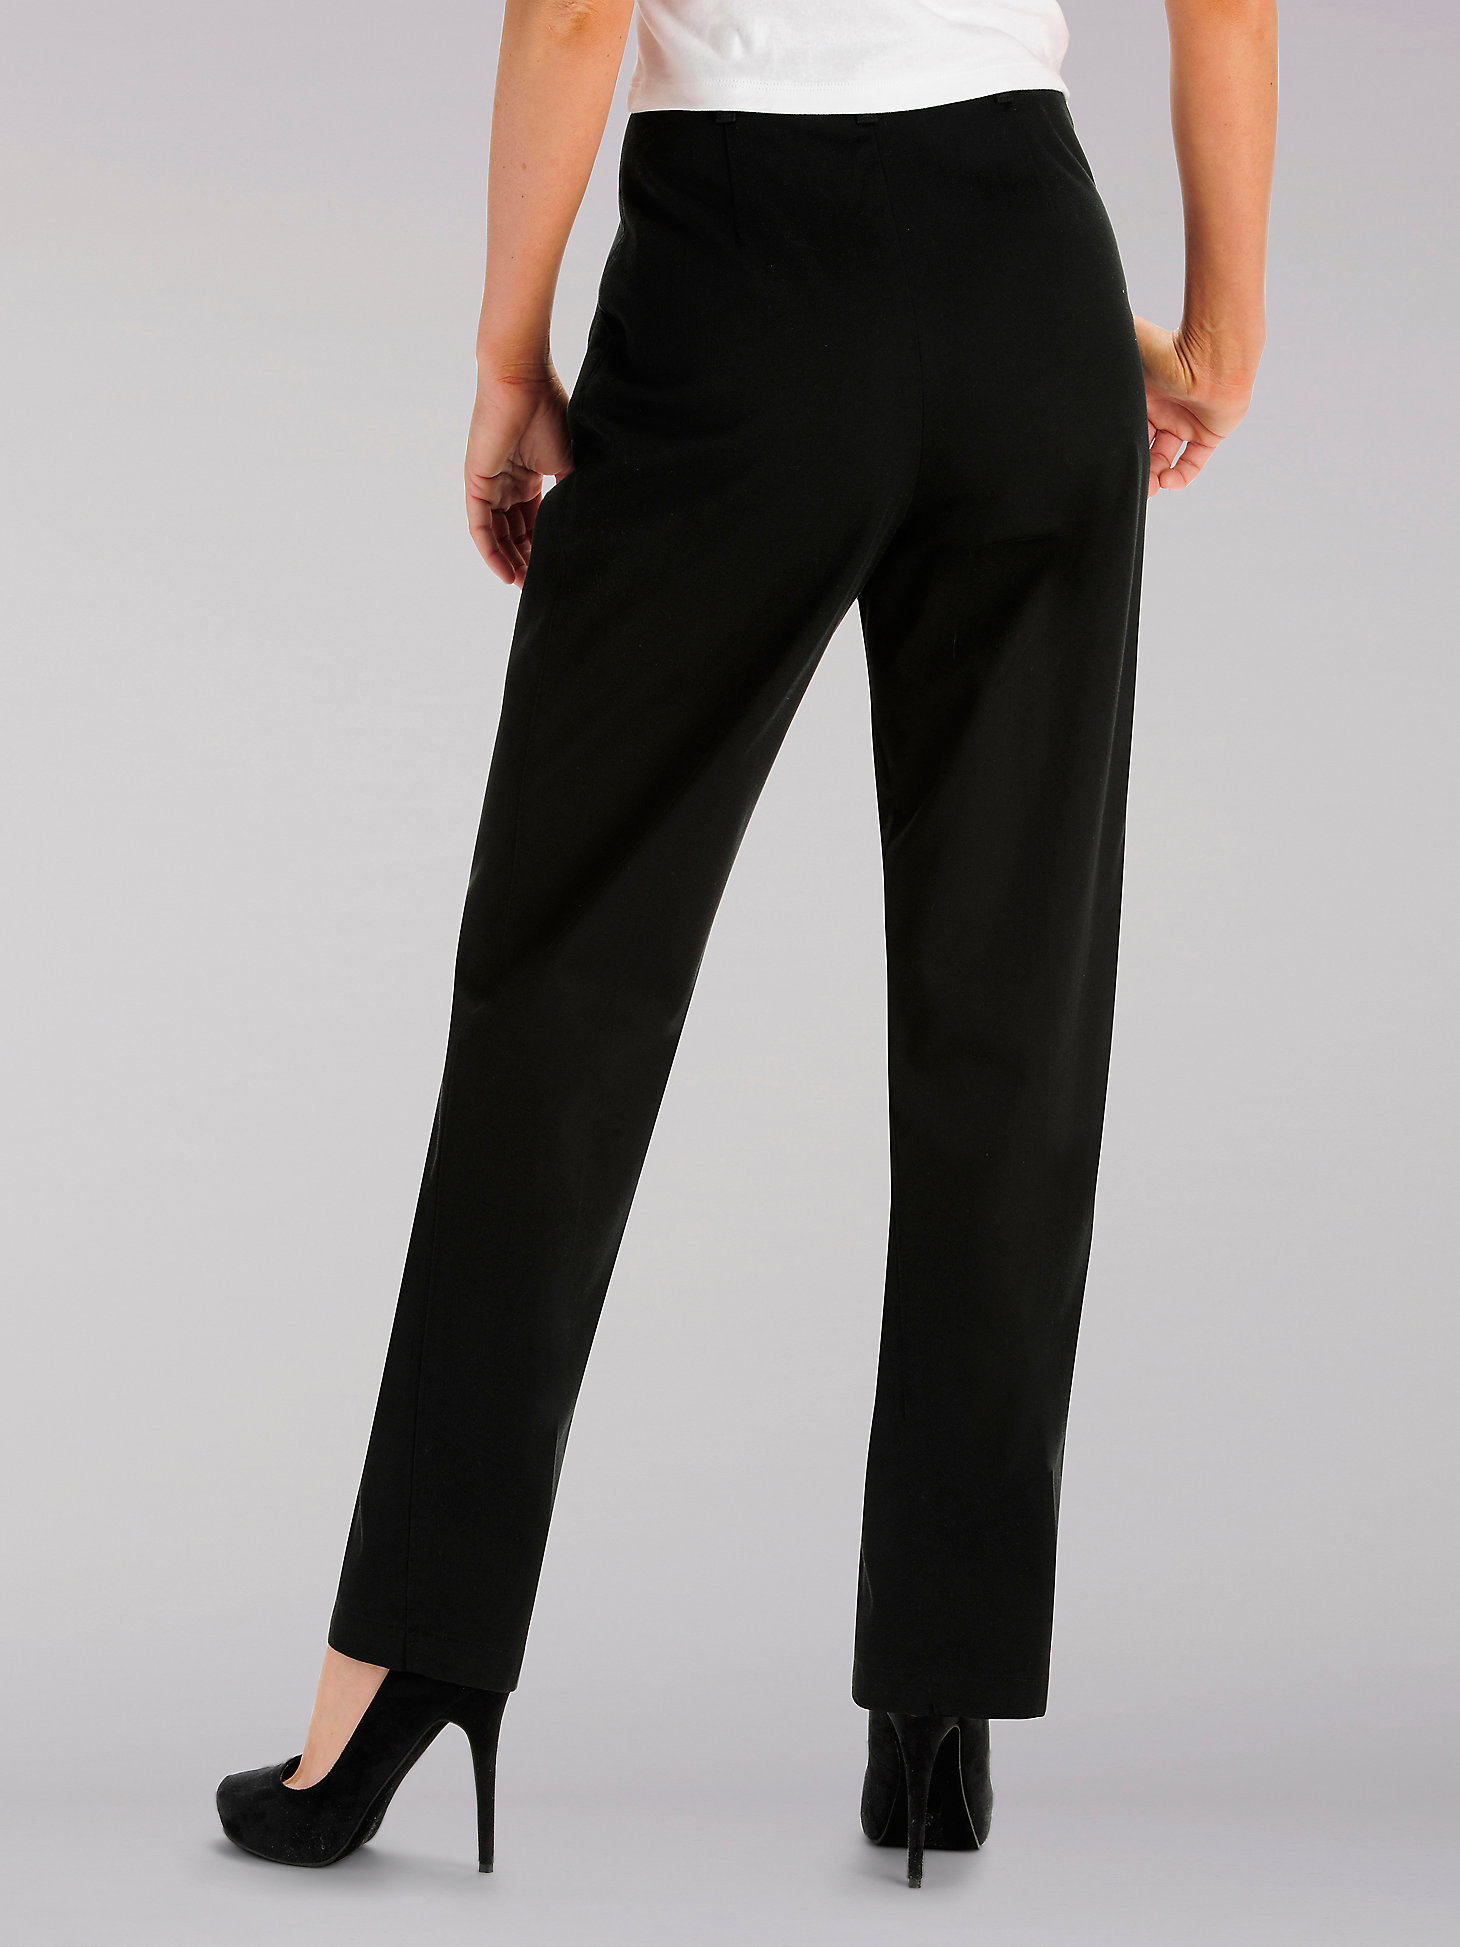 Women’s Side Elastic Pants (Petite) in Black alternative view 1